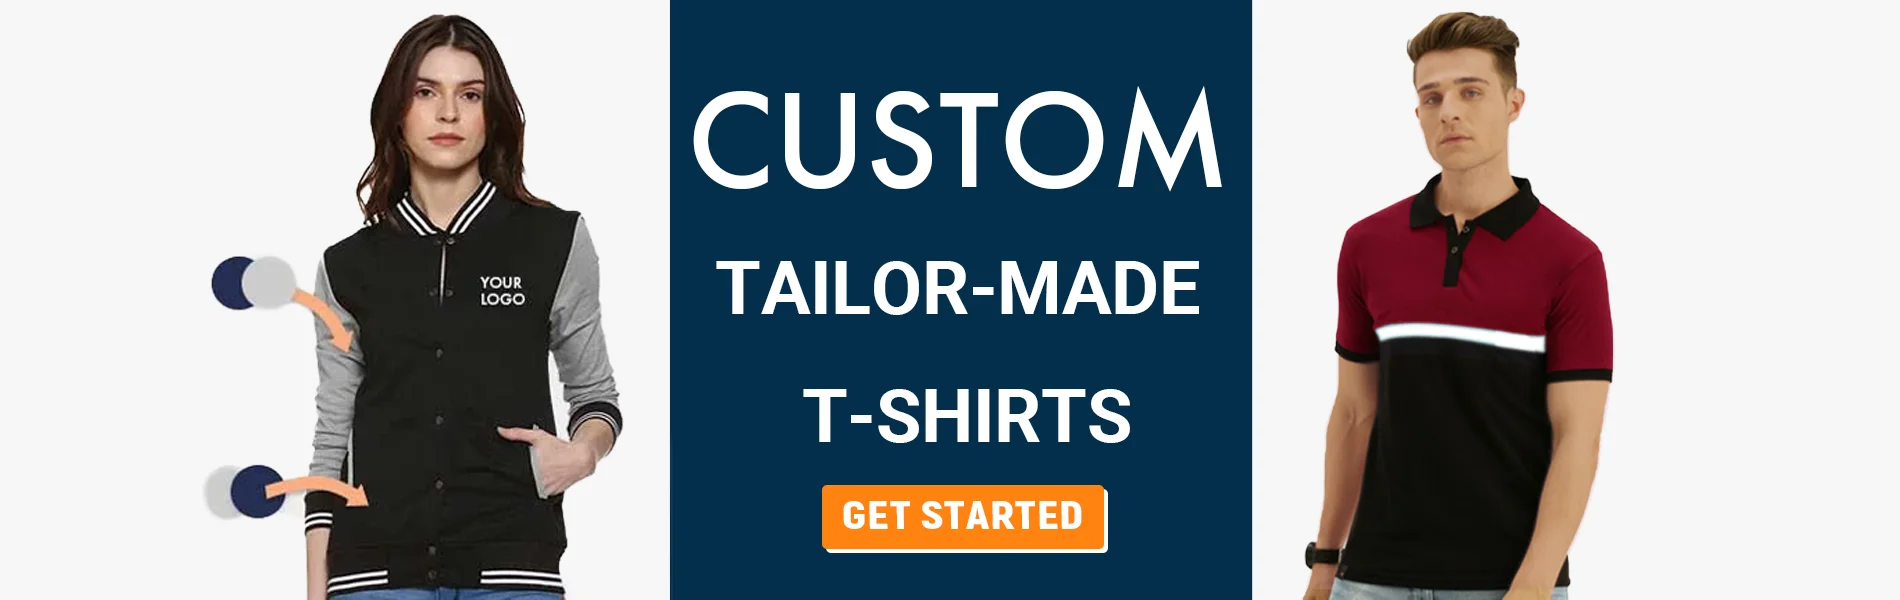 custom tailormade t-shirts amritsar